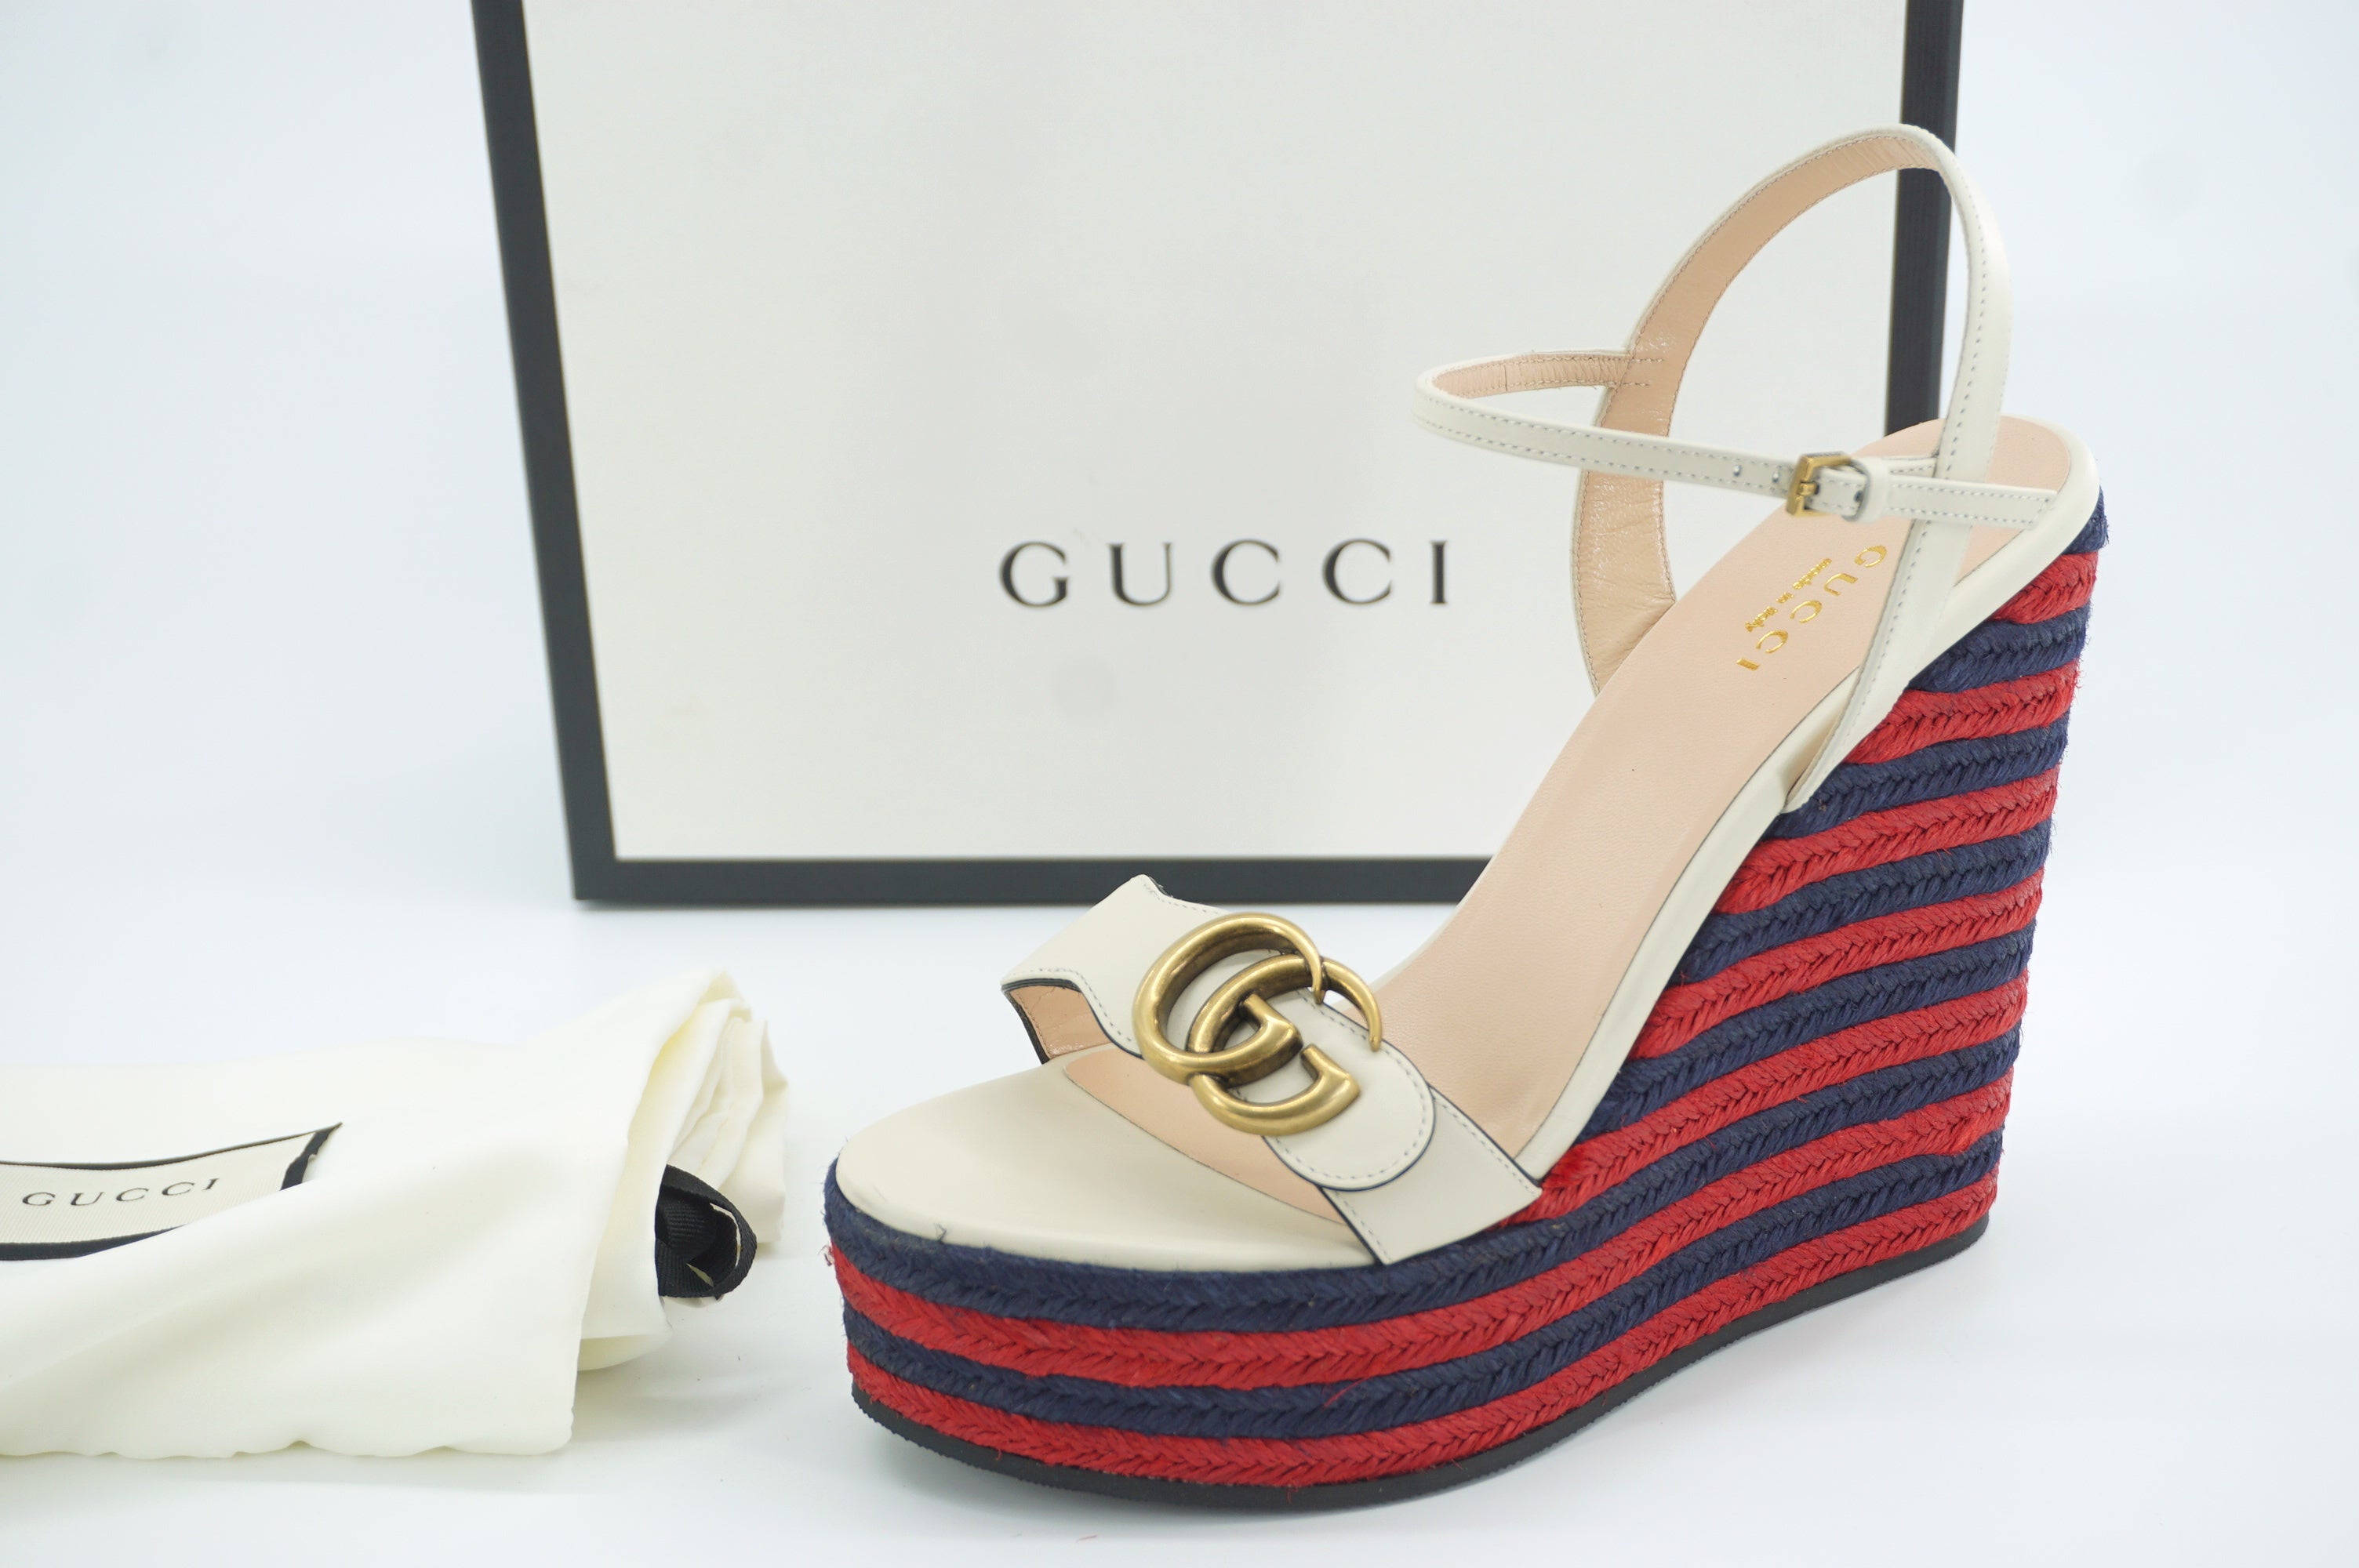 Gucci Maramont Lifford White Platform Espadrille Wedge Sandals SZ 38 NIB $990